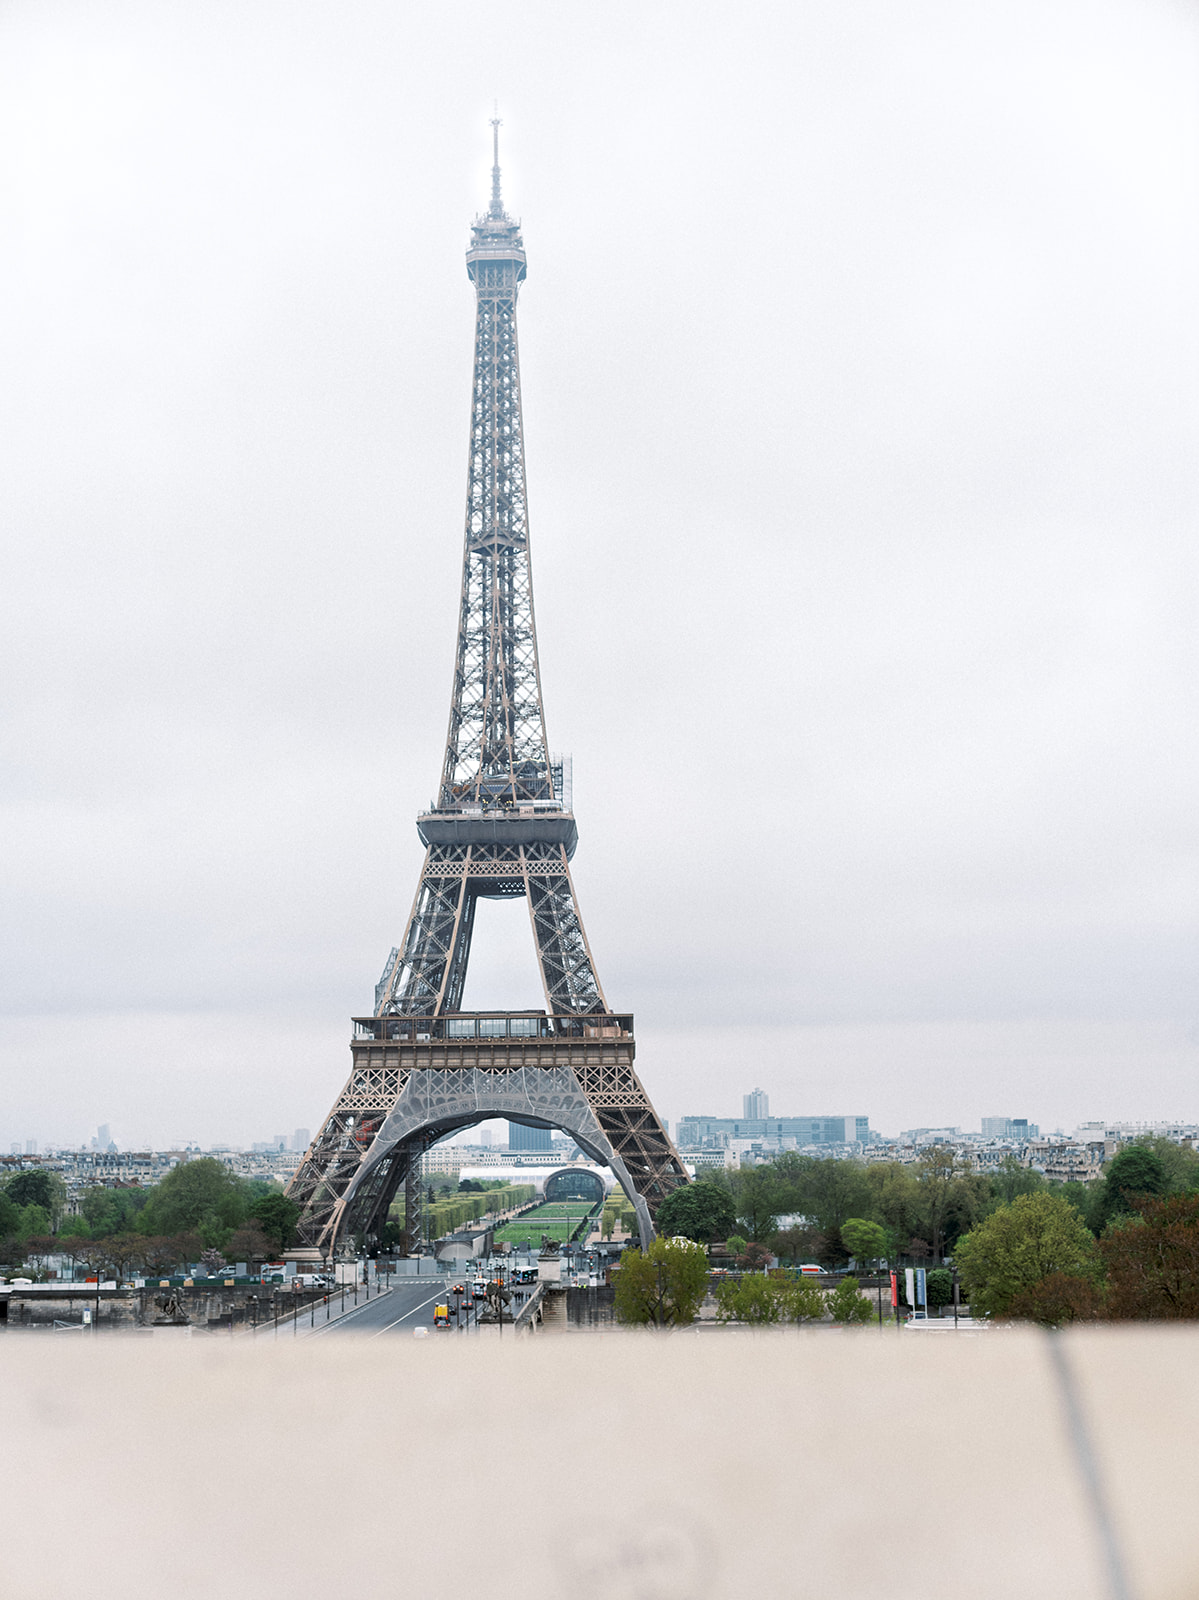 Eiffel Tower by itself.